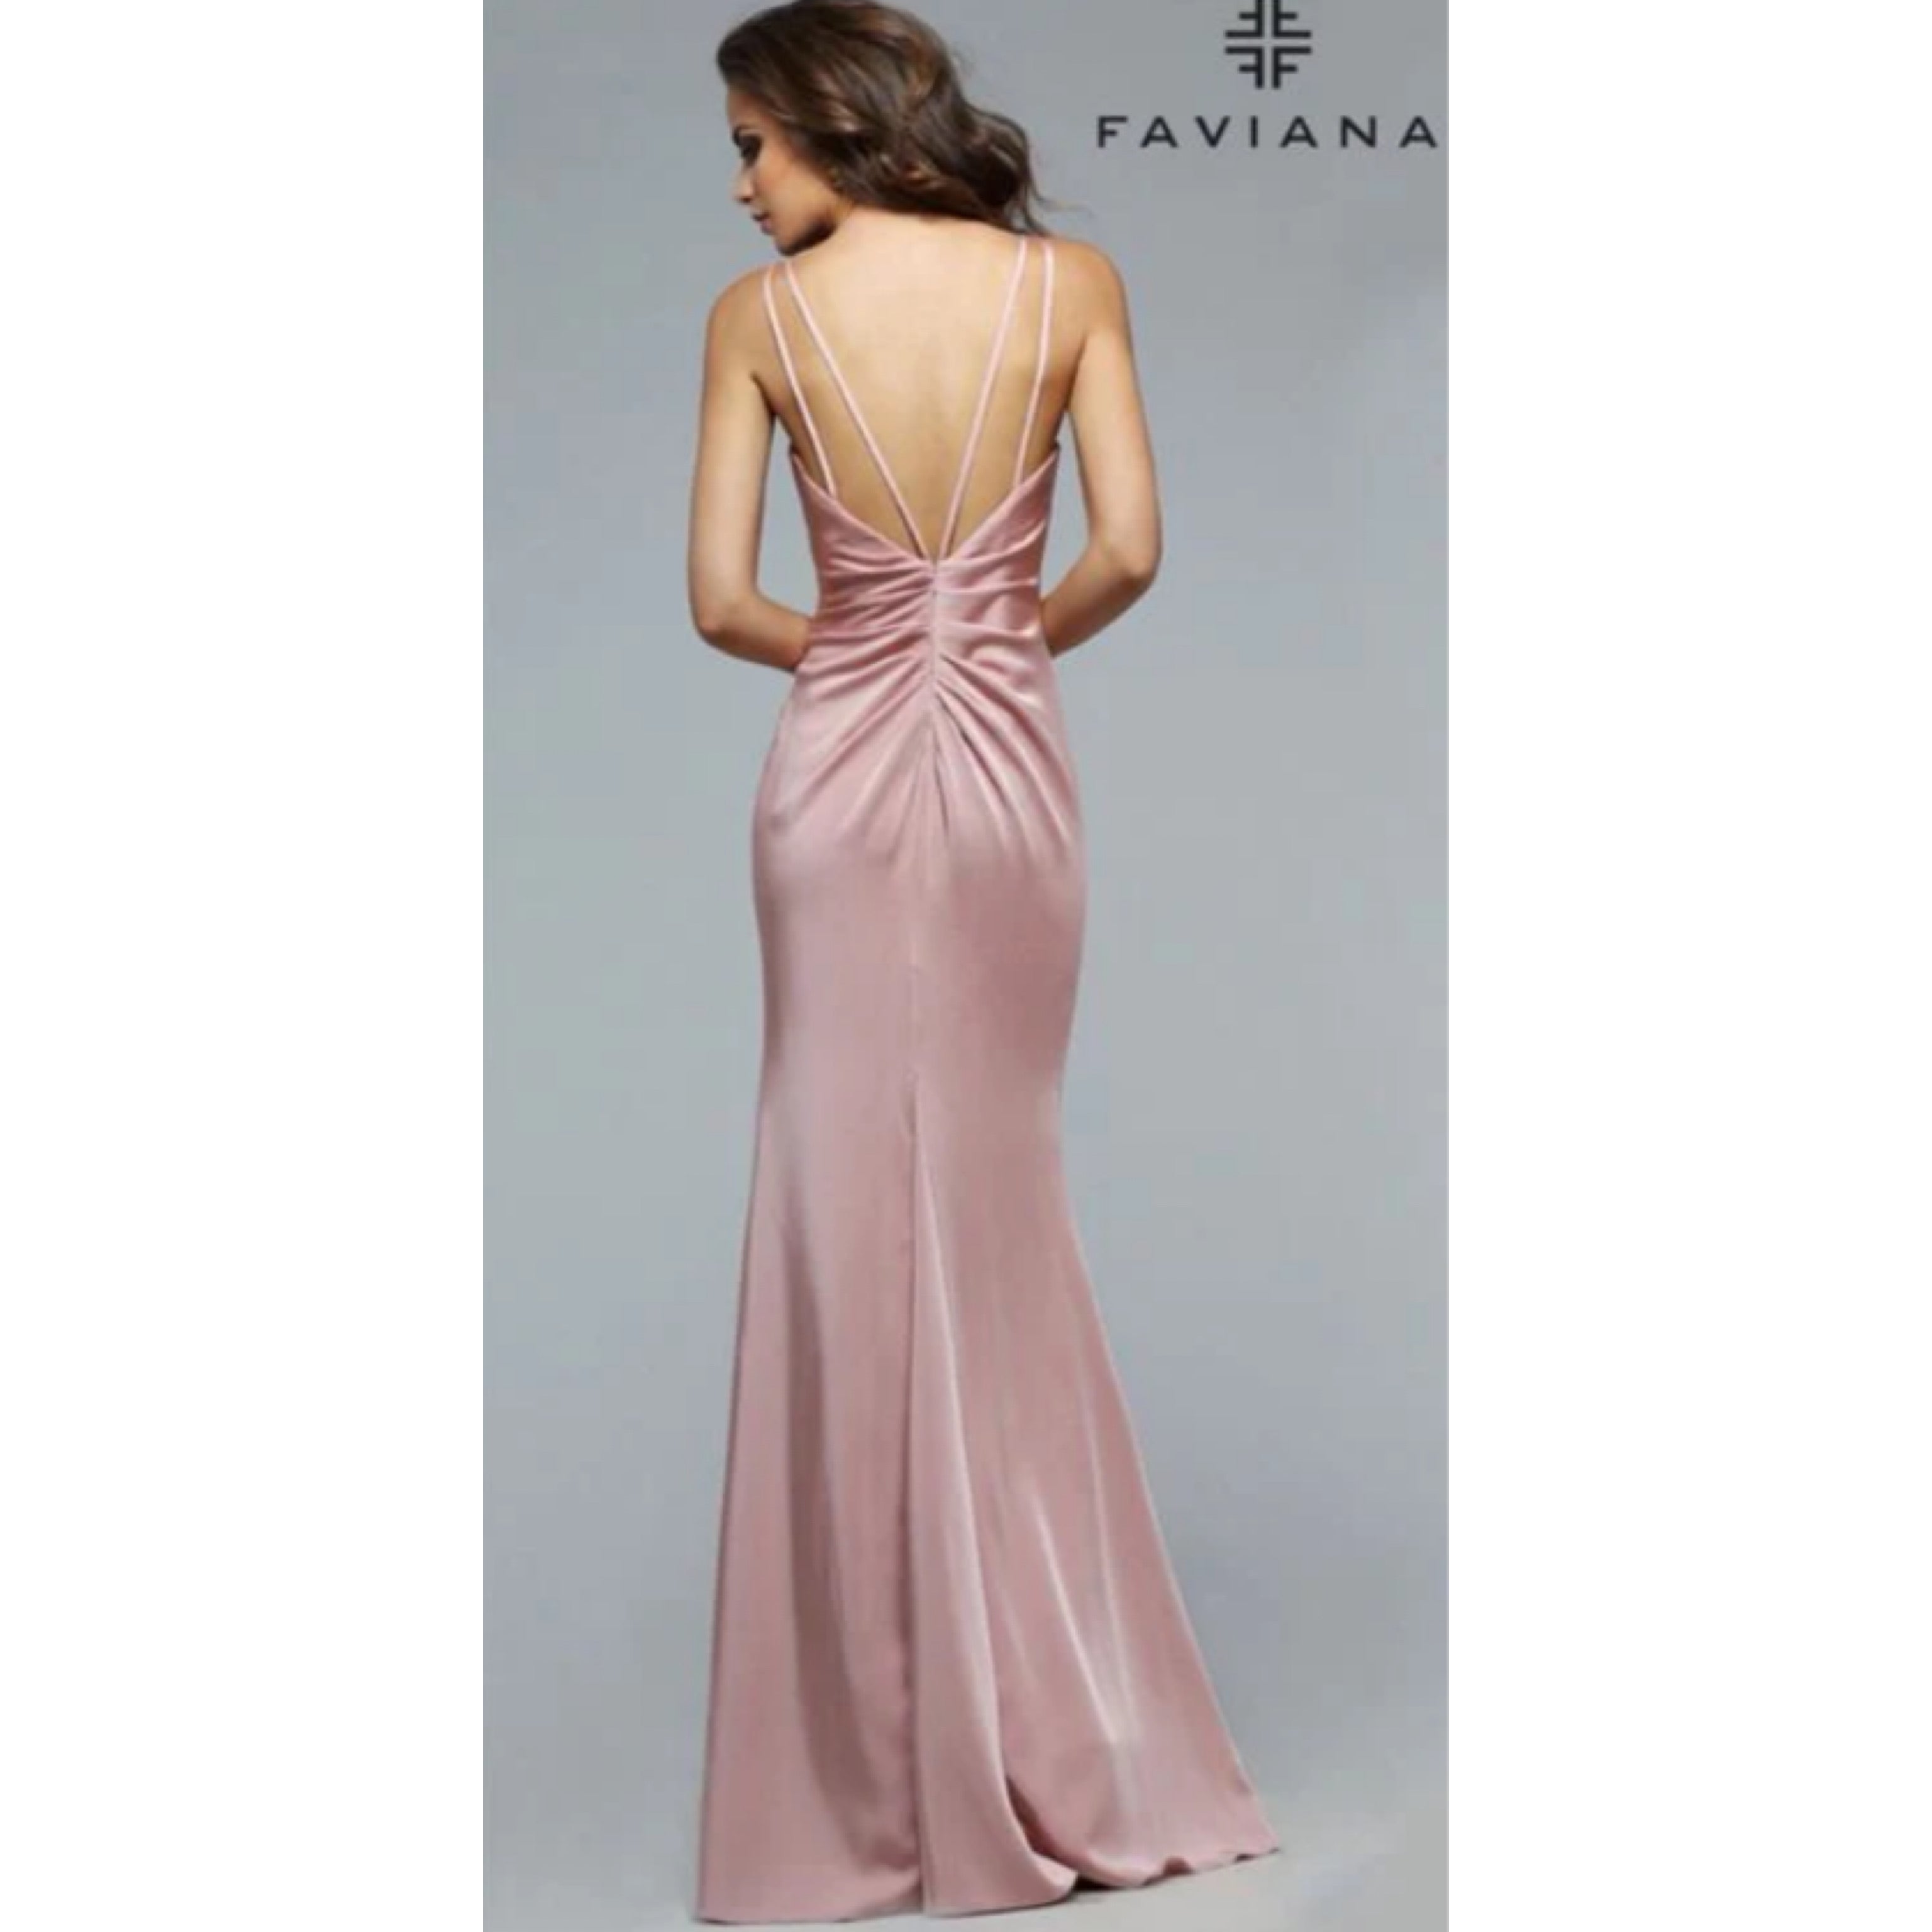 Faviana light blue dress, size 8, NEW WITH TAGS!